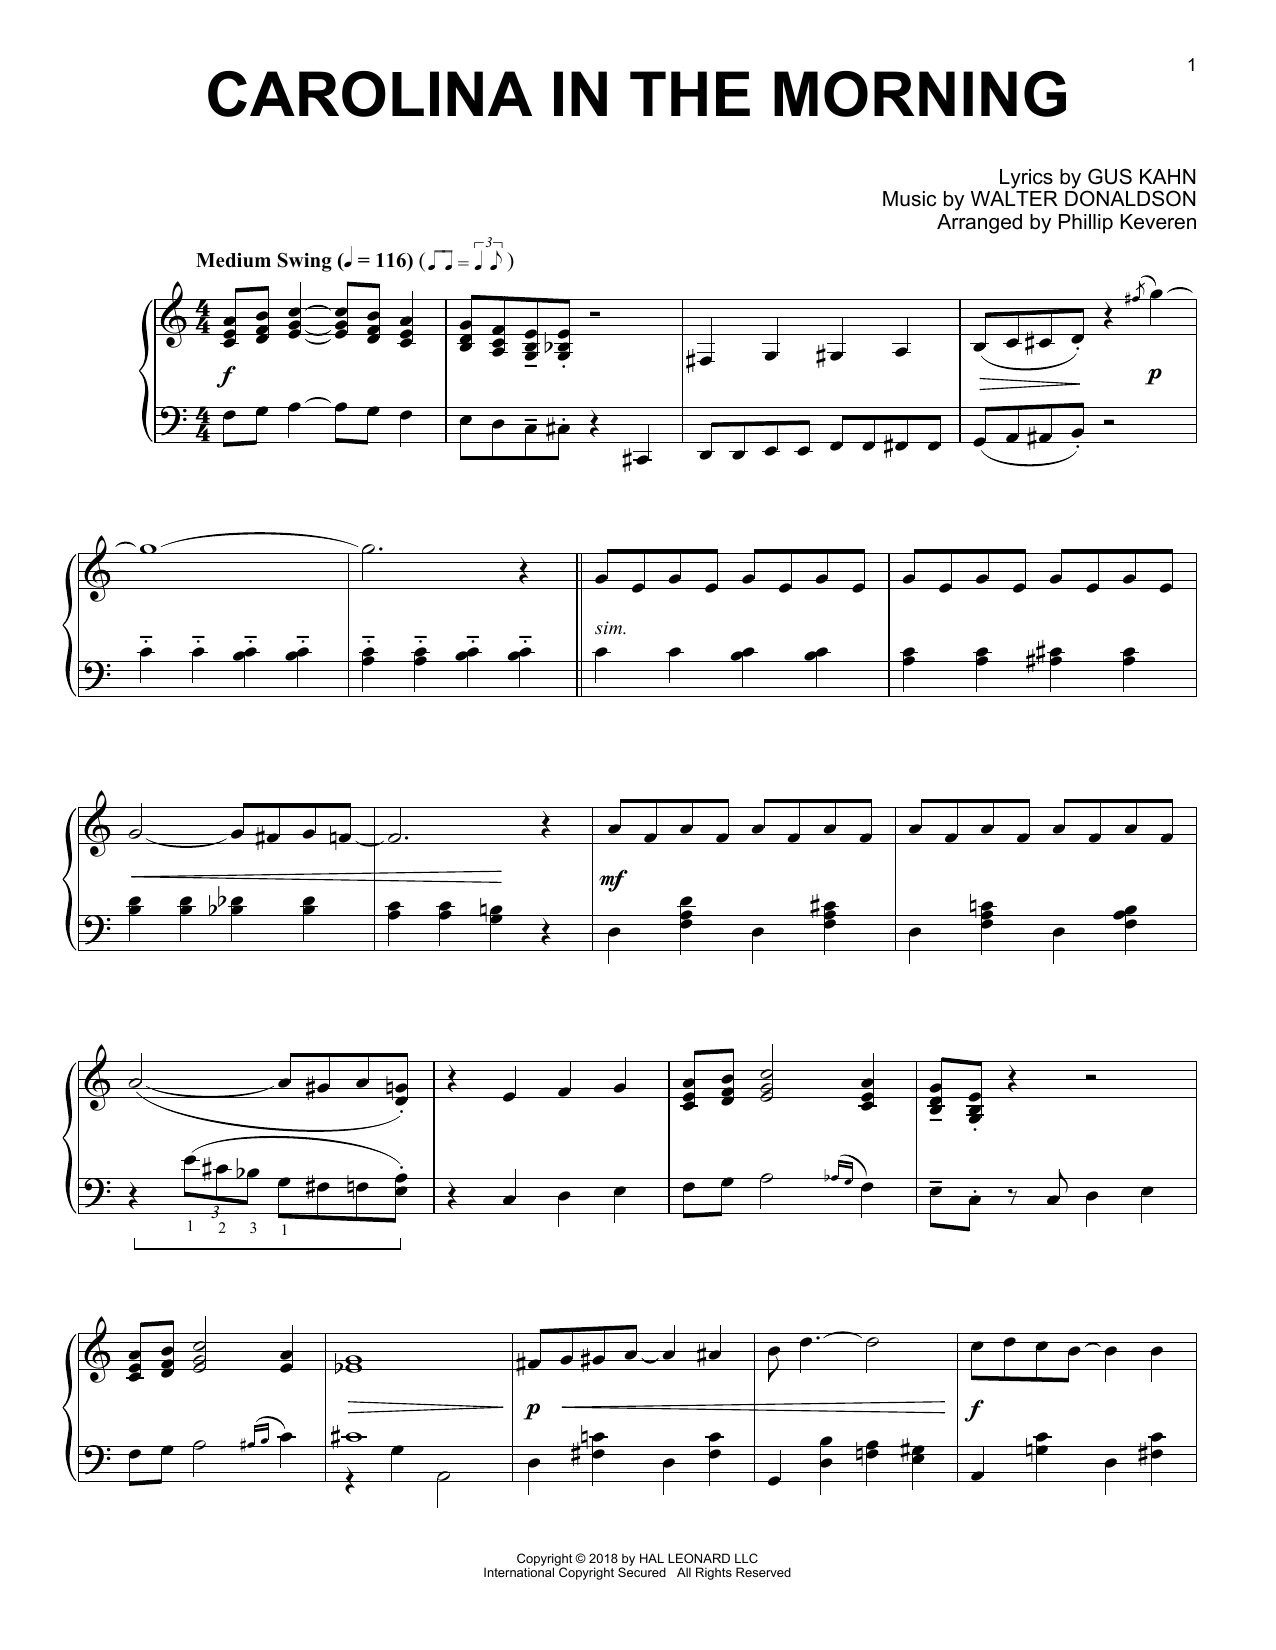 Gus Kahn Carolina In The Morning [Jazz version] (arr. Phillip Keveren) Sheet Music Notes & Chords for Piano - Download or Print PDF